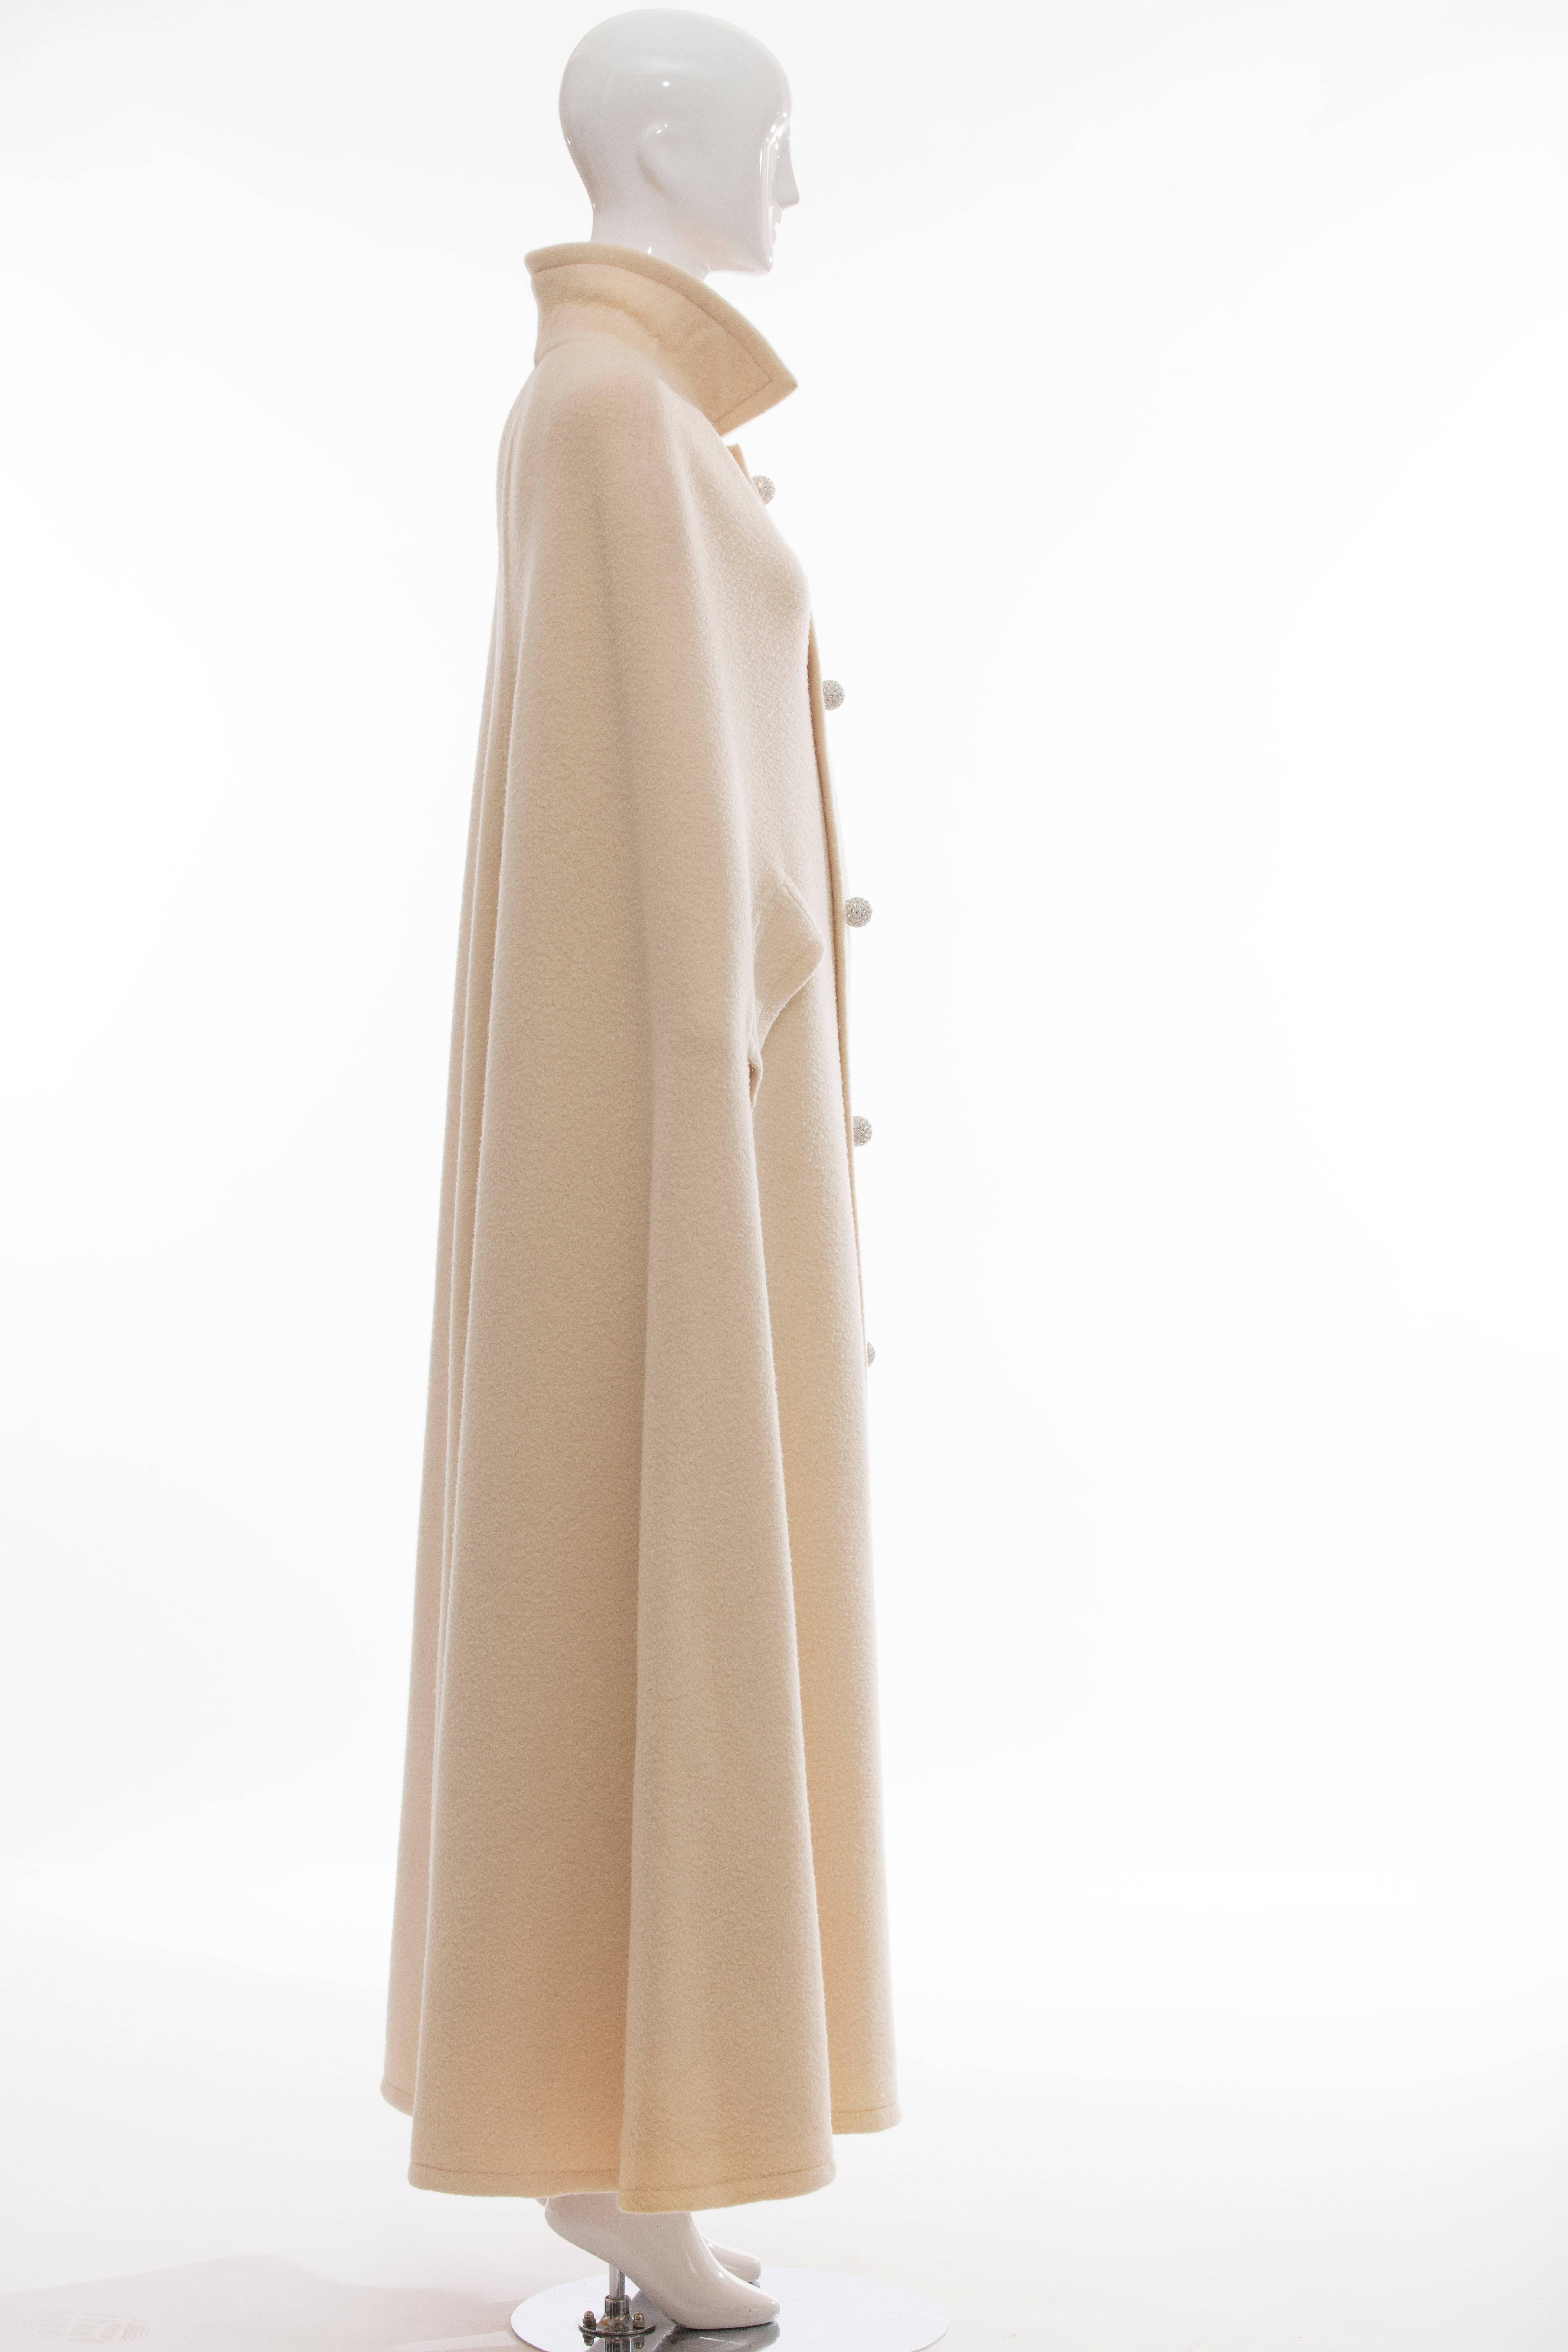 Christian Dior Haute Couture By Marc Bohan Cream Wool Cape, Autumn - Winter 1966 In Good Condition In Cincinnati, OH